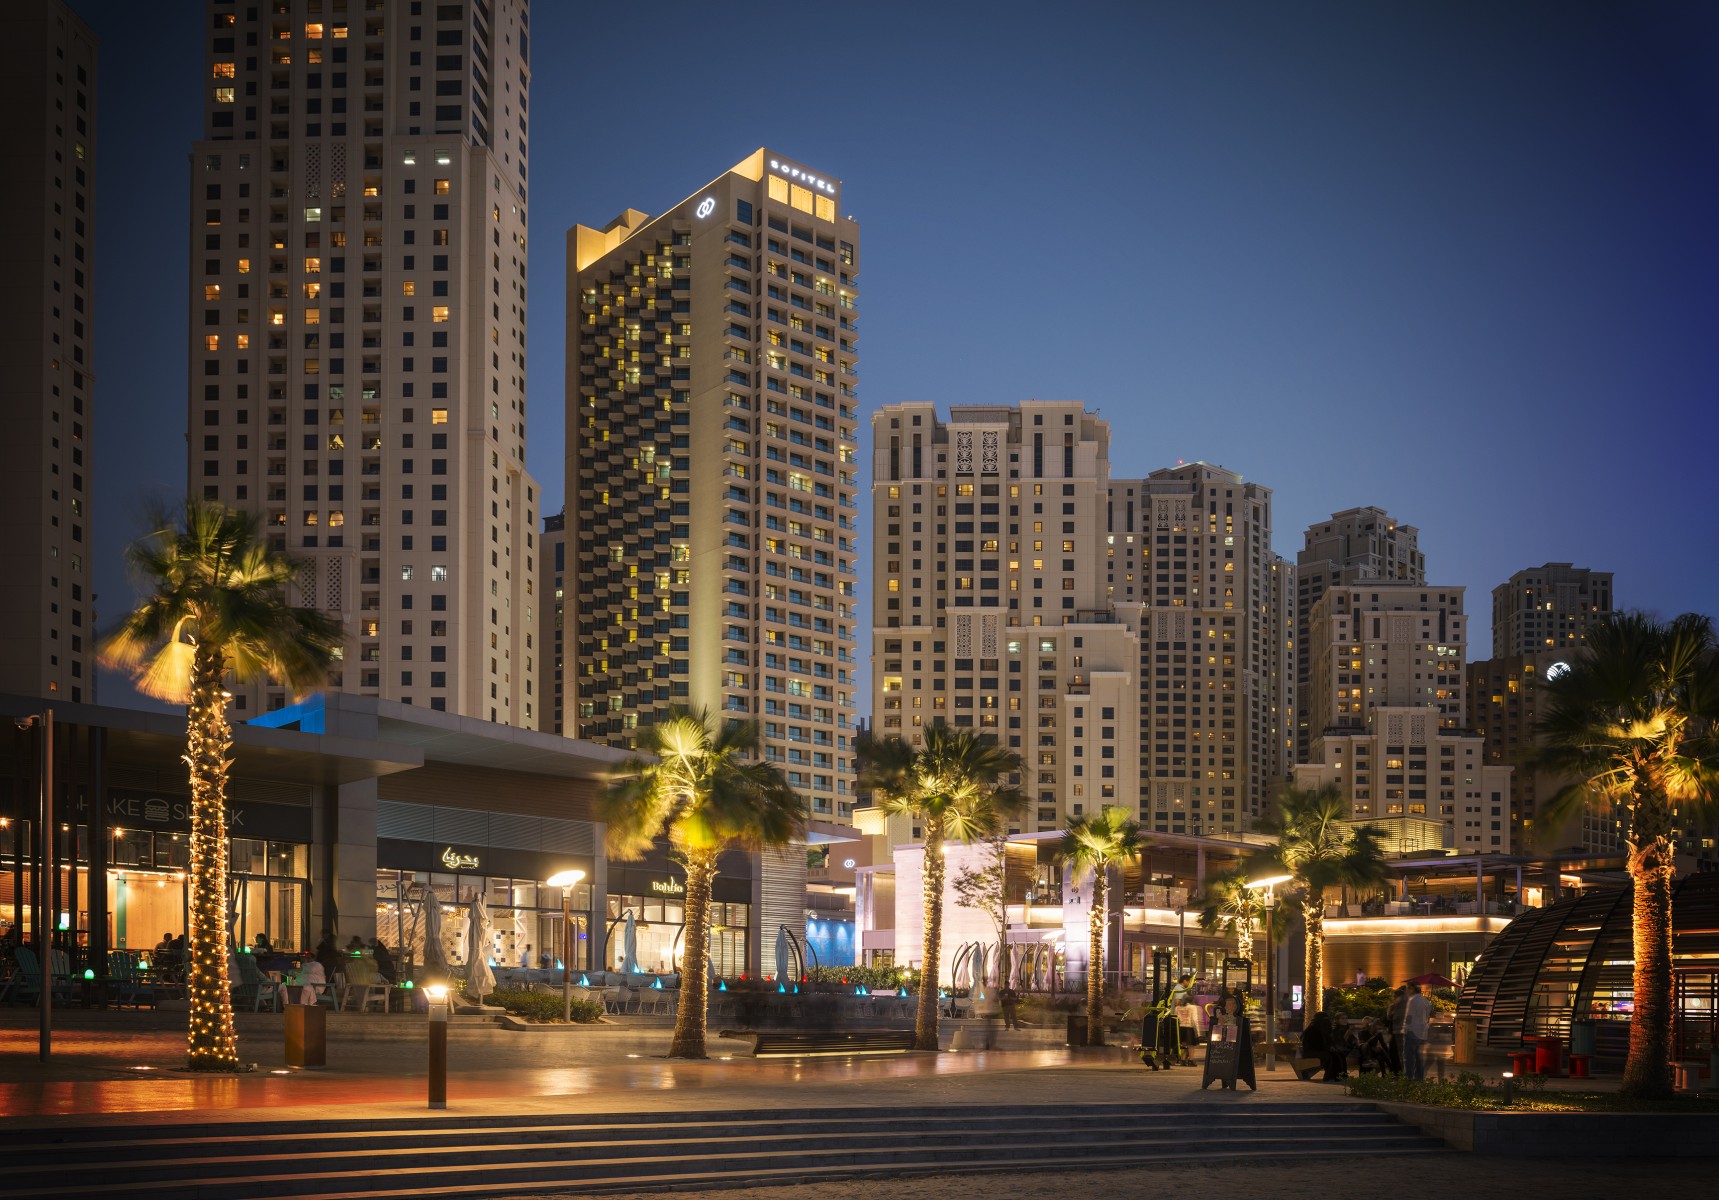 Hotels at Jumeirah Beach Residence